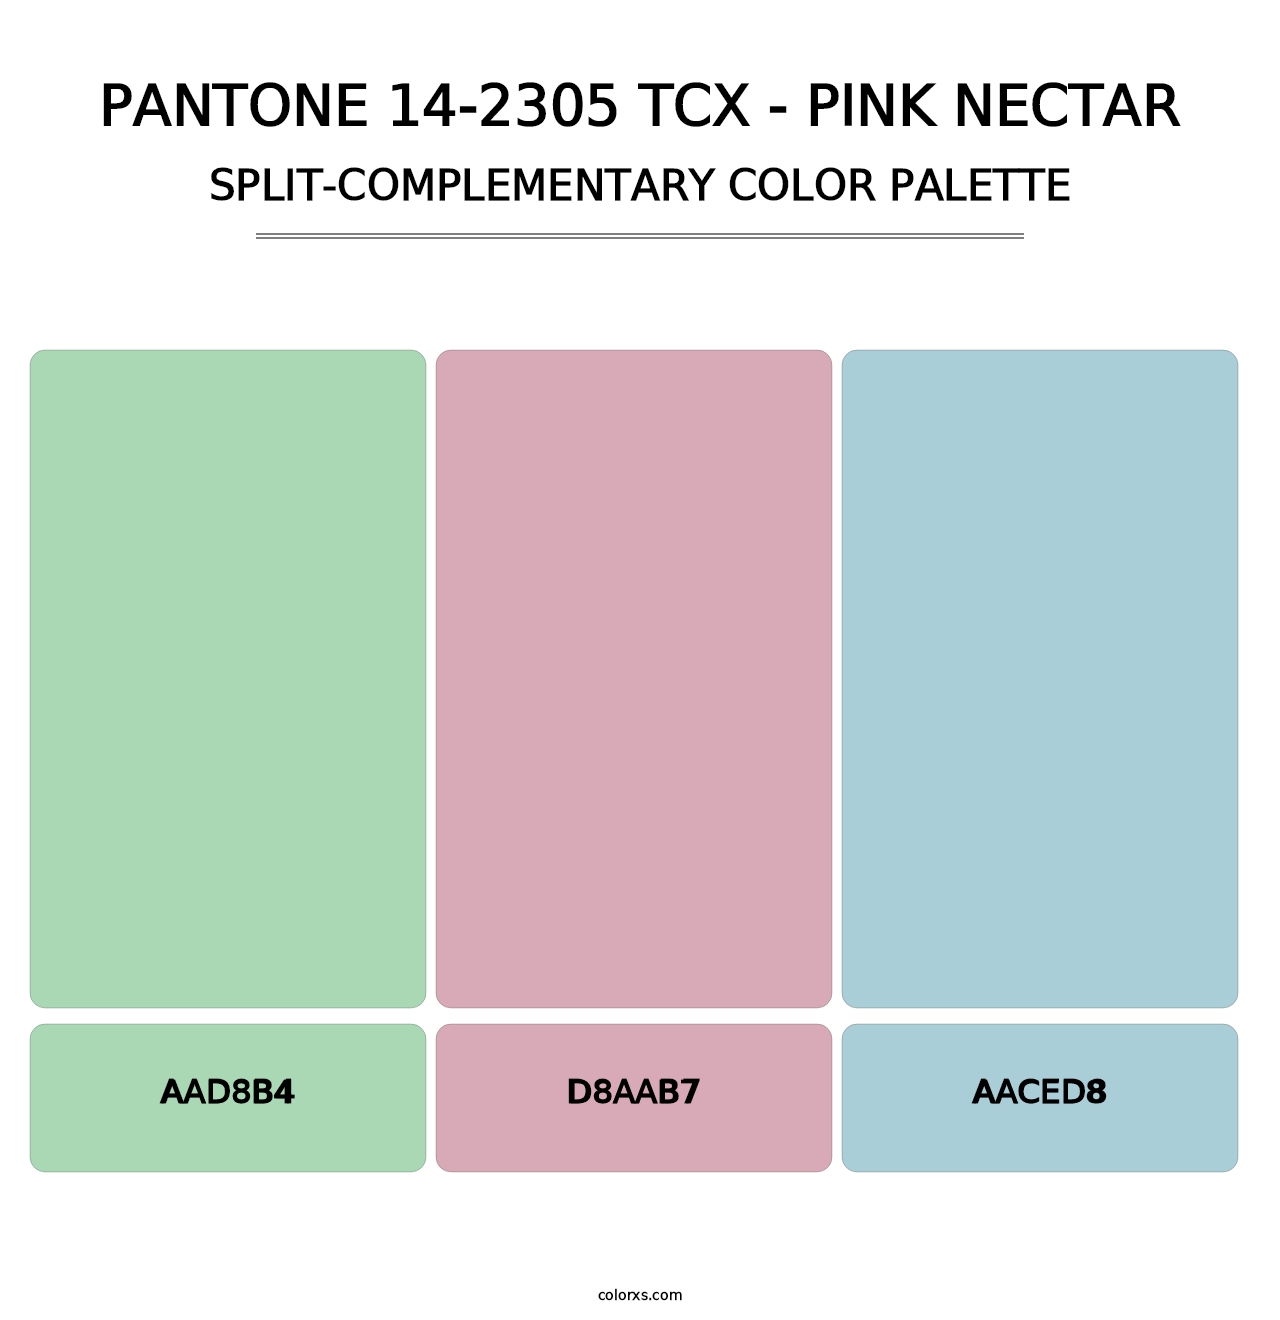 PANTONE 14-2305 TCX - Pink Nectar - Split-Complementary Color Palette